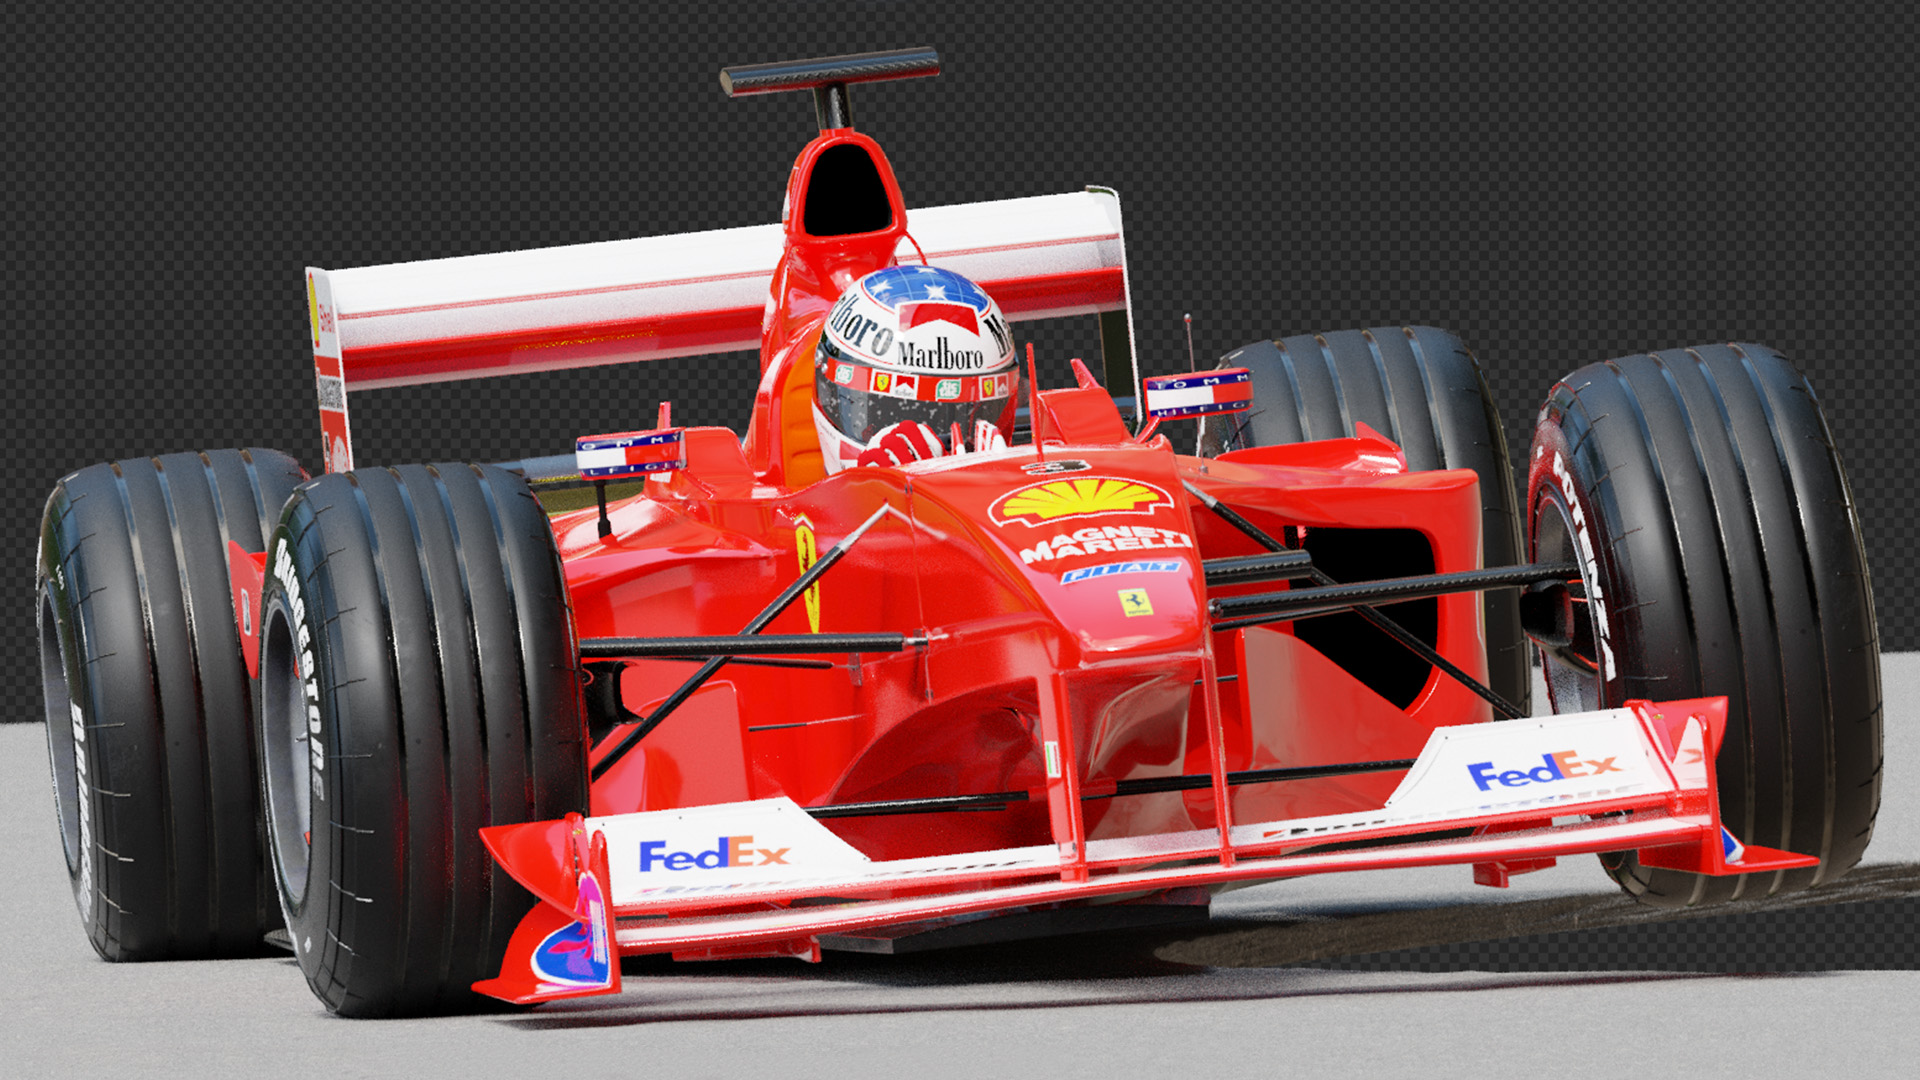 Formula One 2001 Grand Prix in Imola Werbetruck Sattelzug 4